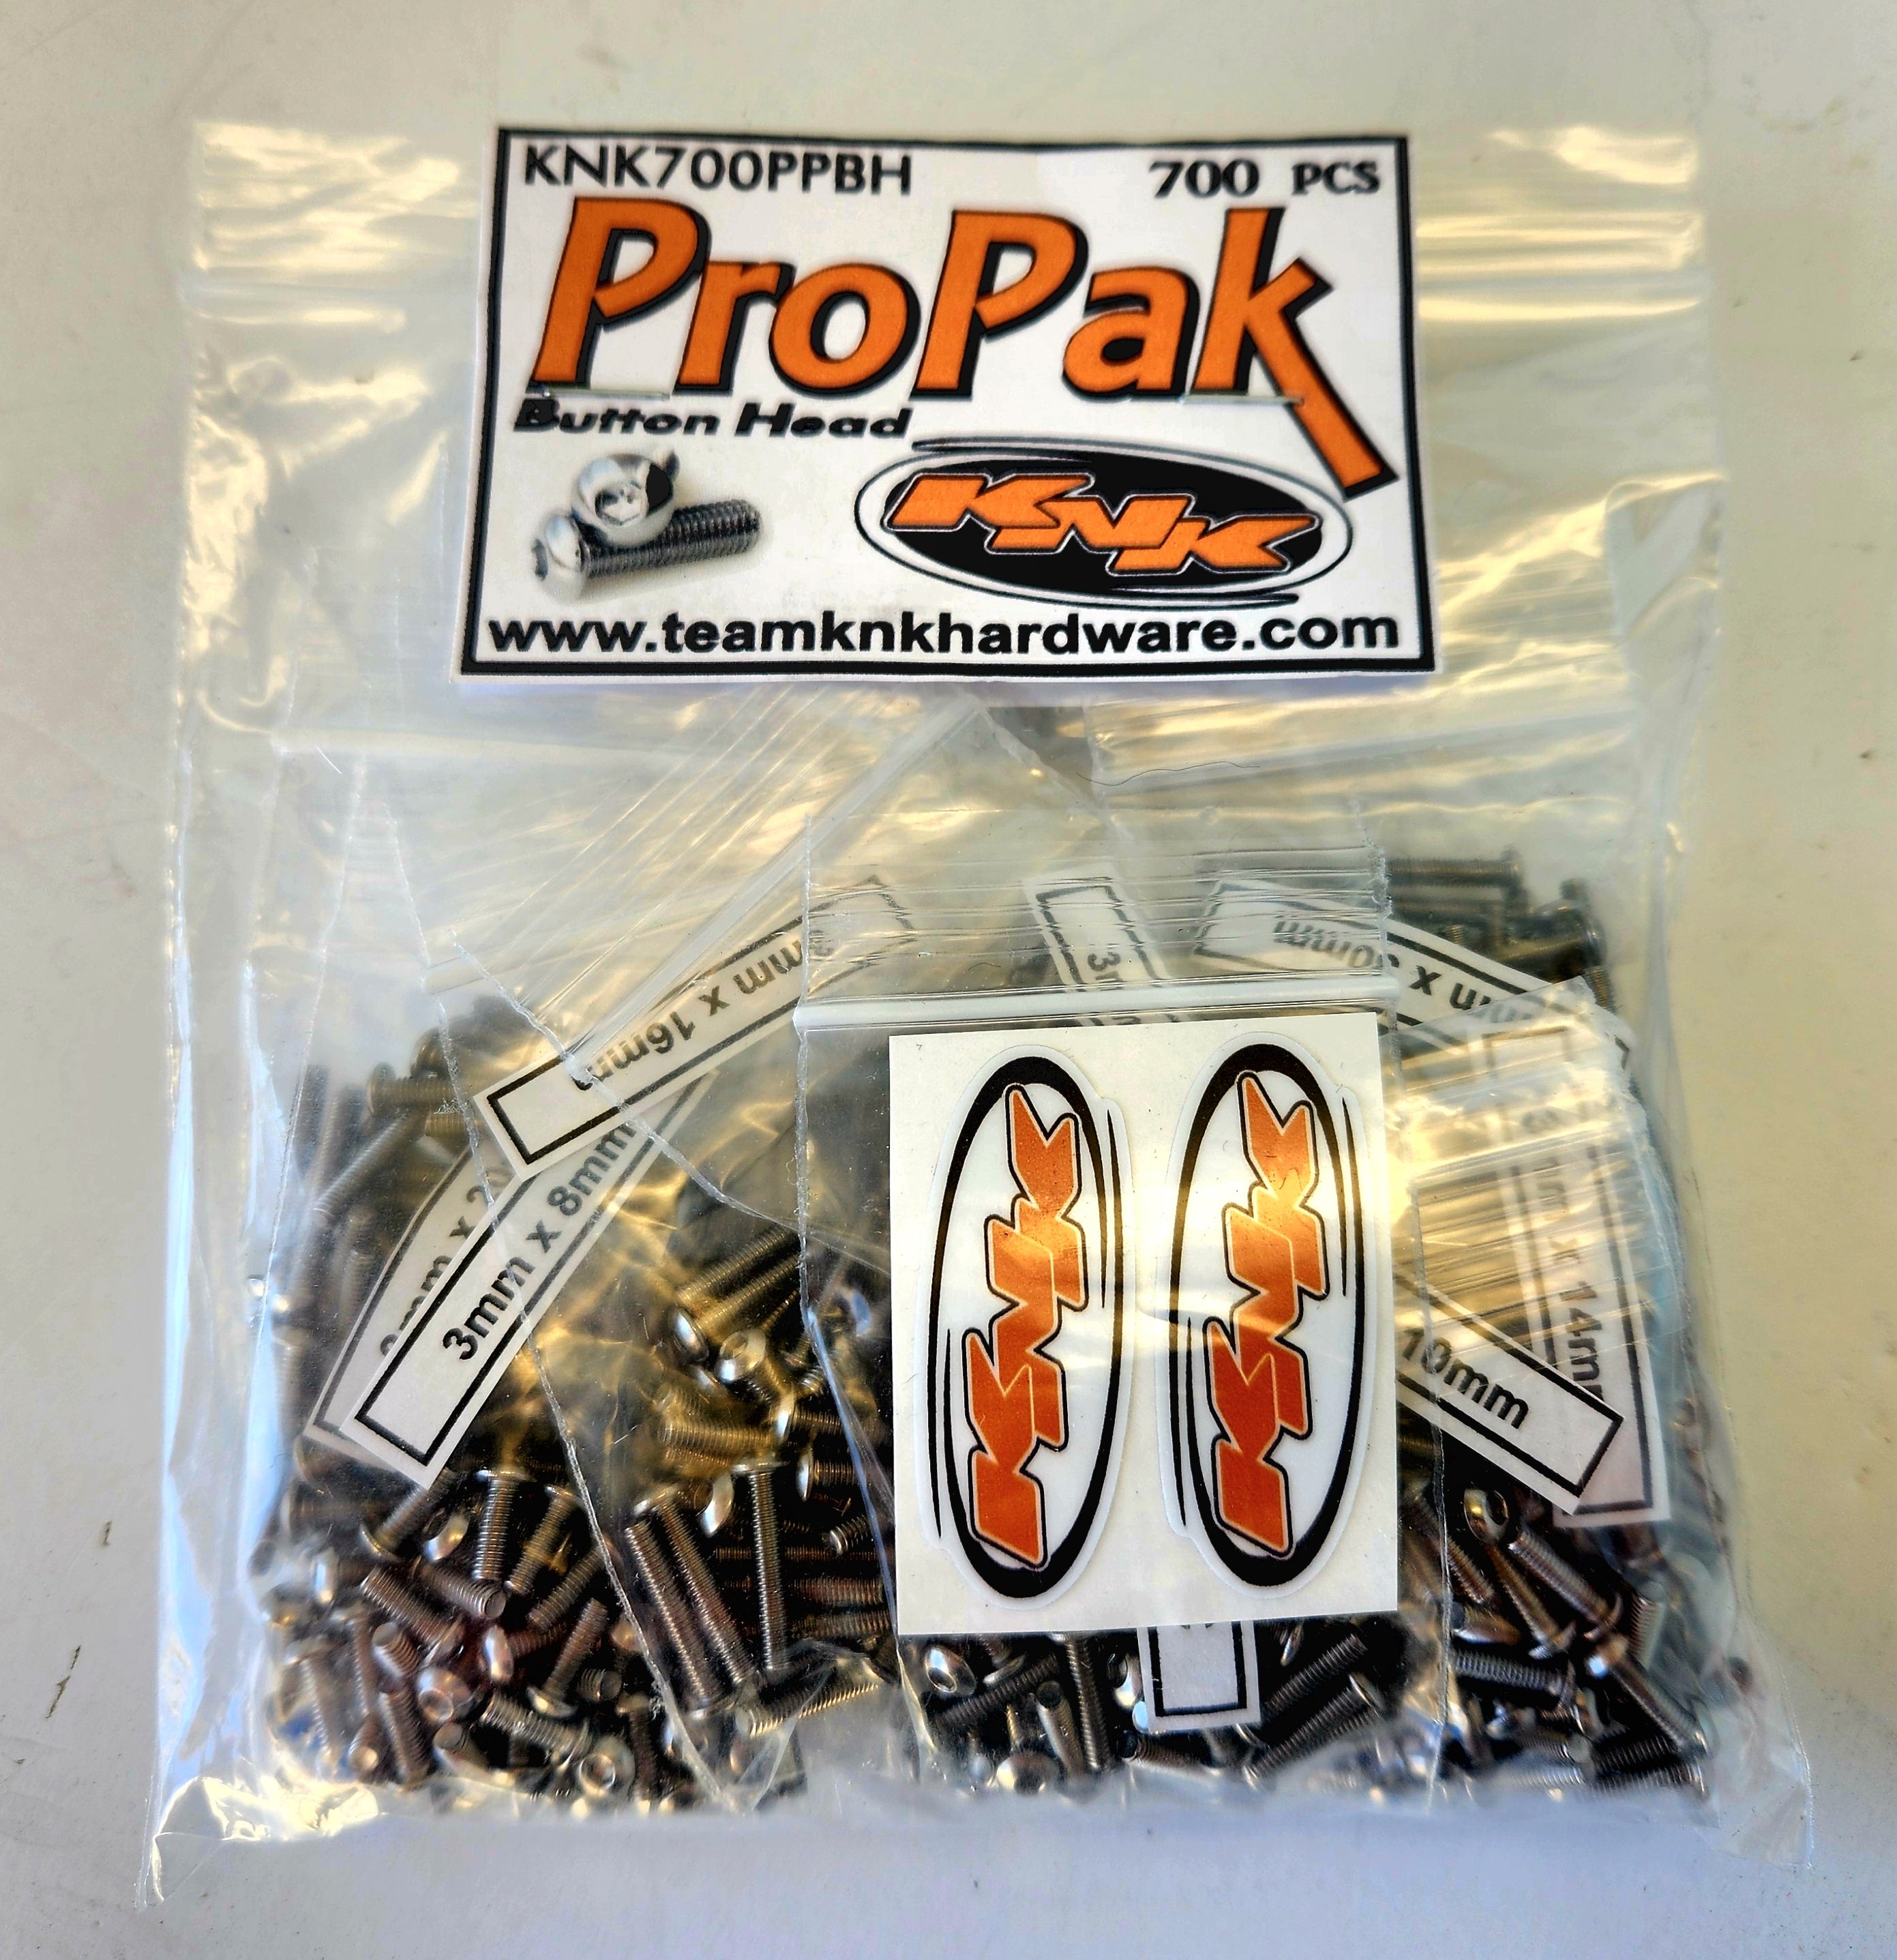 Button Head ProPak Stainless Steel (700 pcs)